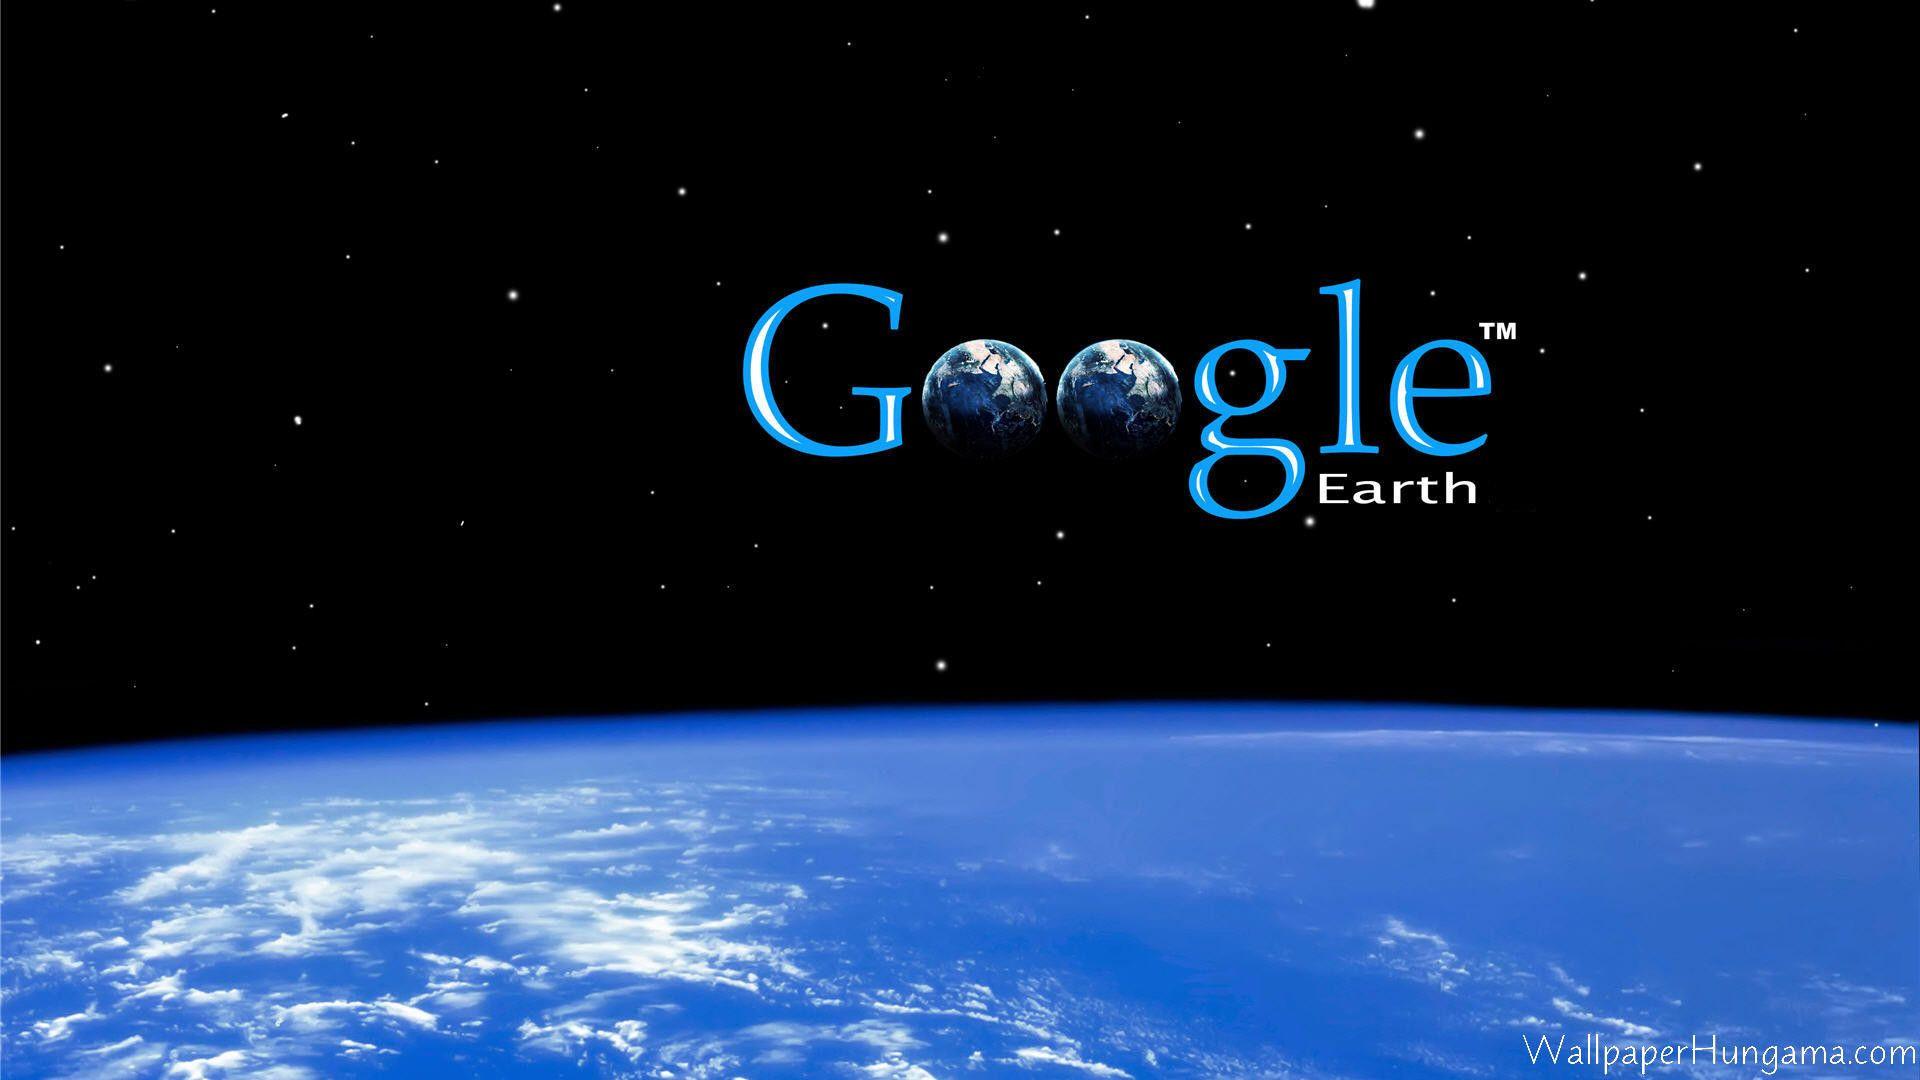 Google Earth Logo - How to Install Google Earth in Ubuntu 15.04 64-bit - Tips on Ubuntu